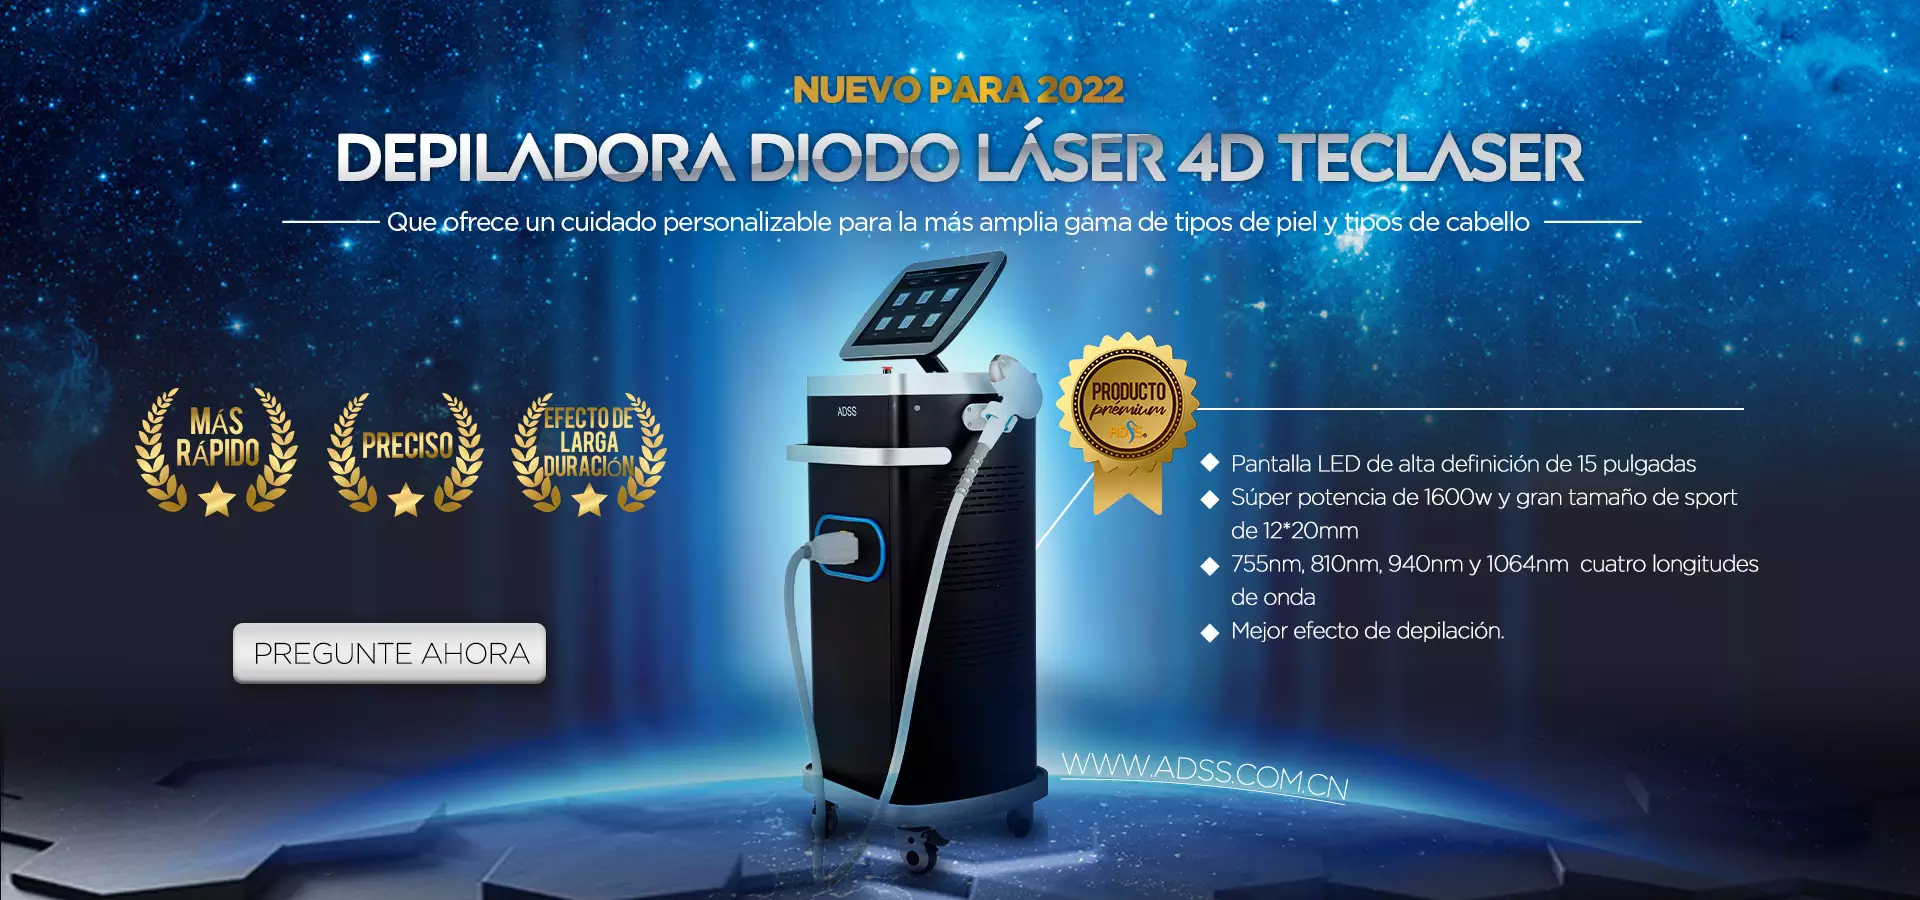 Maquina Depilacion Definitiva Laser Diodo Adss Premium